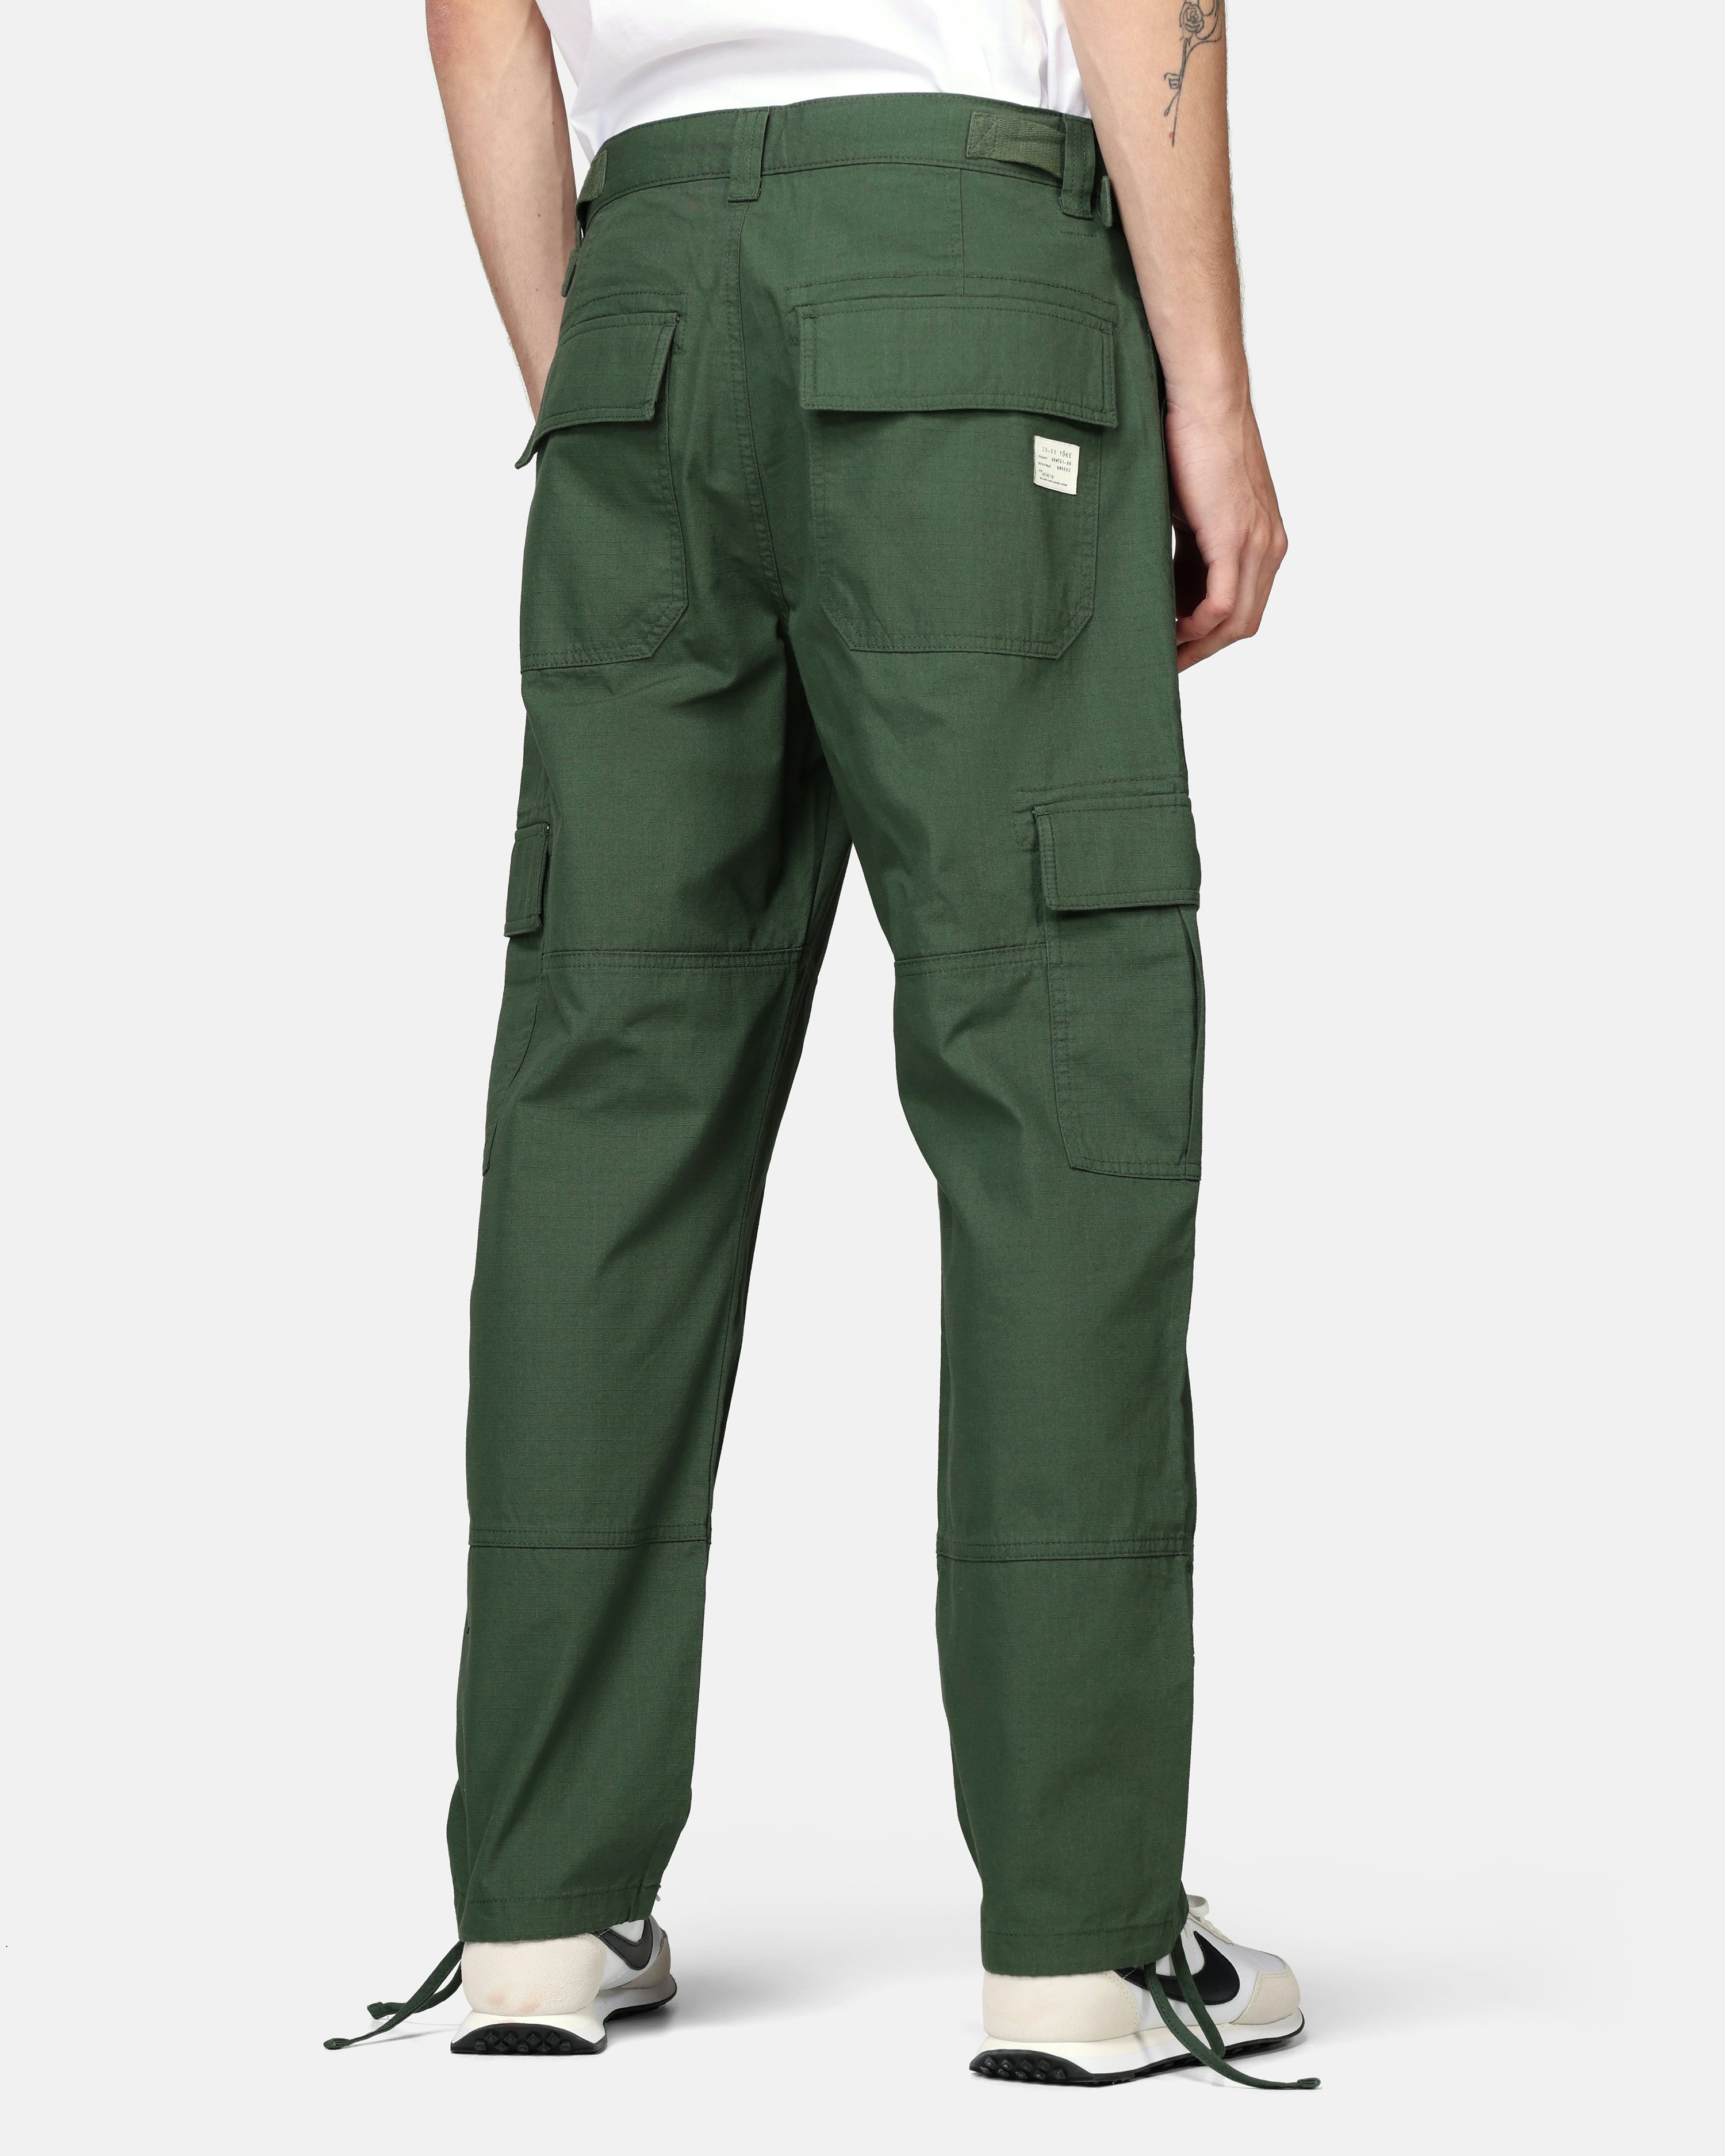 YOKE Military Cargo Pants